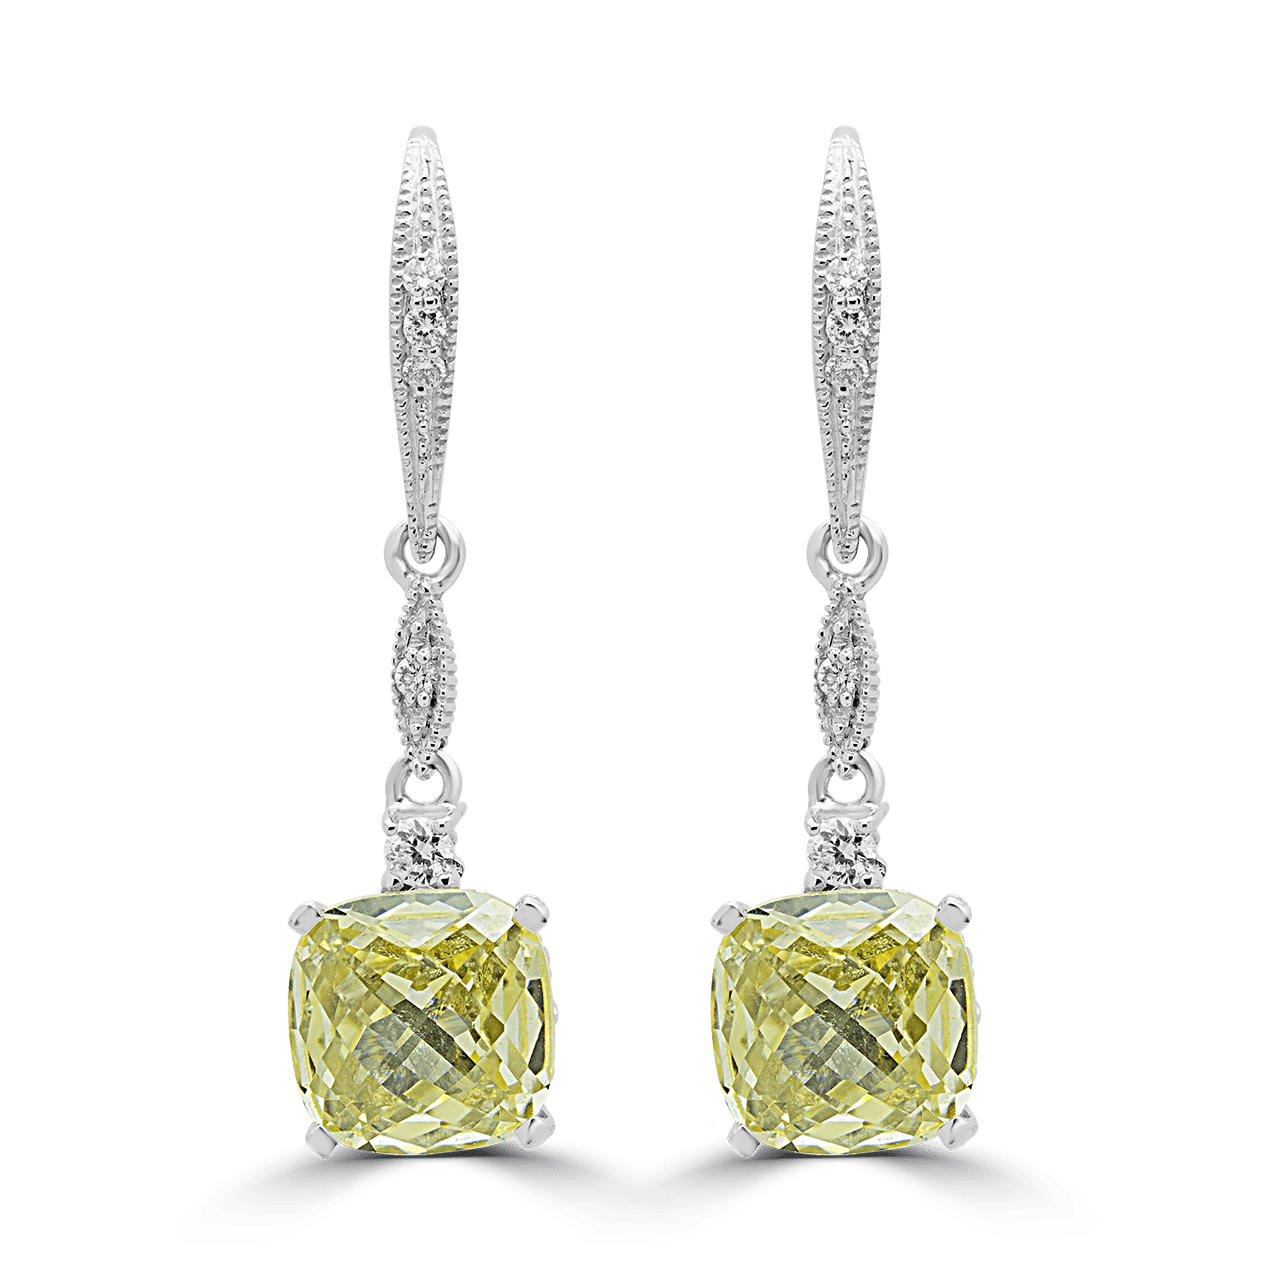 Cushion cut CZ & diamond earrings 0.16 (ctw) in 14k white gold